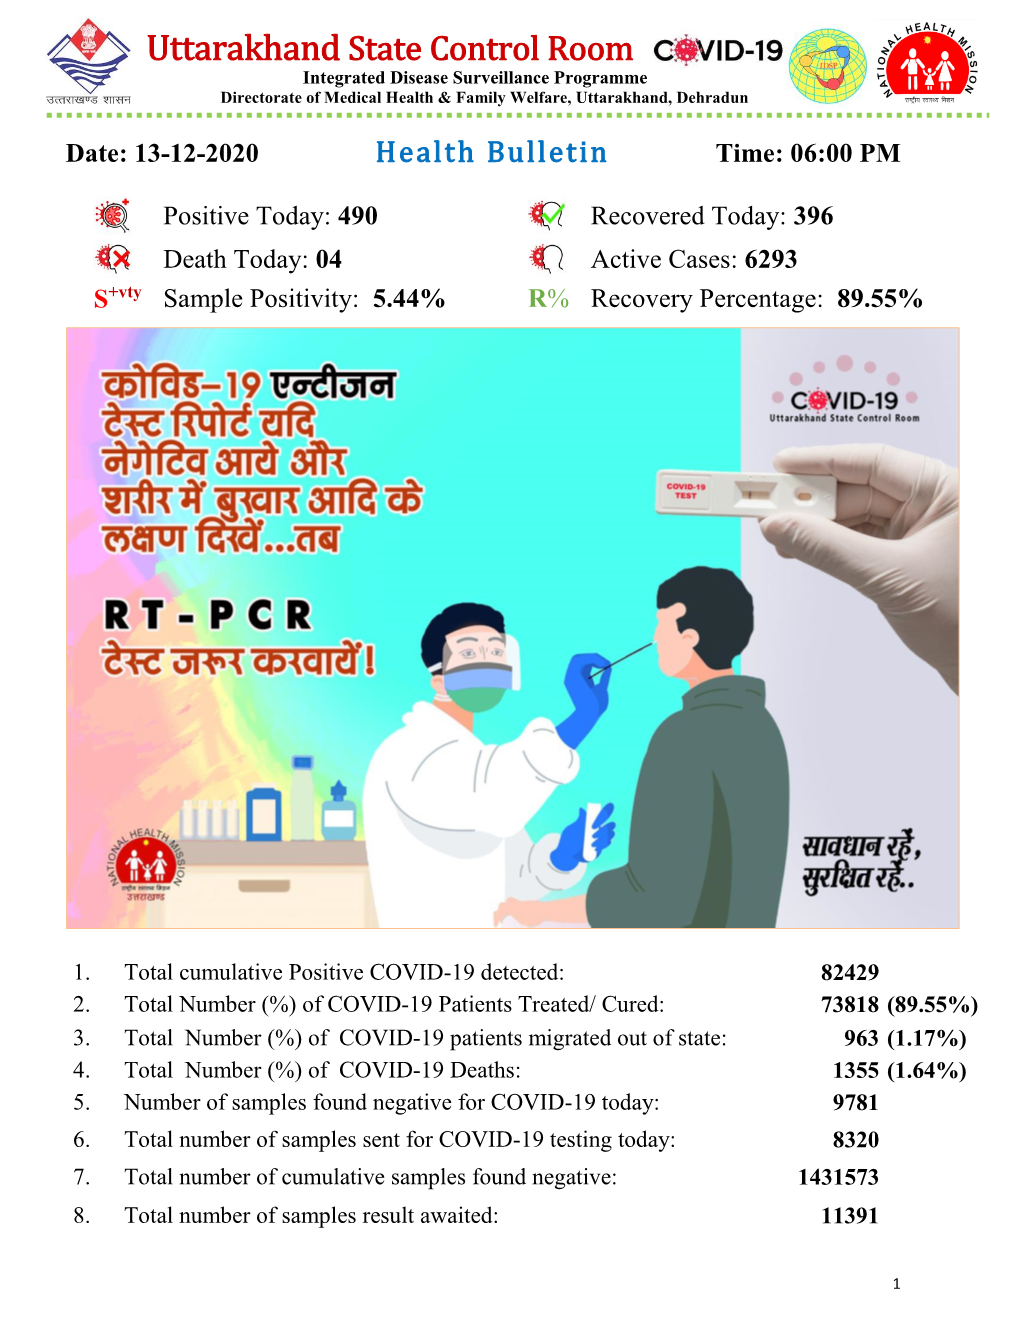 Uttarakhand State Control Room Integrated Disease Surveillance Programme Directorate of Medical Health & Family Welfare, Uttarakhand, Dehradun